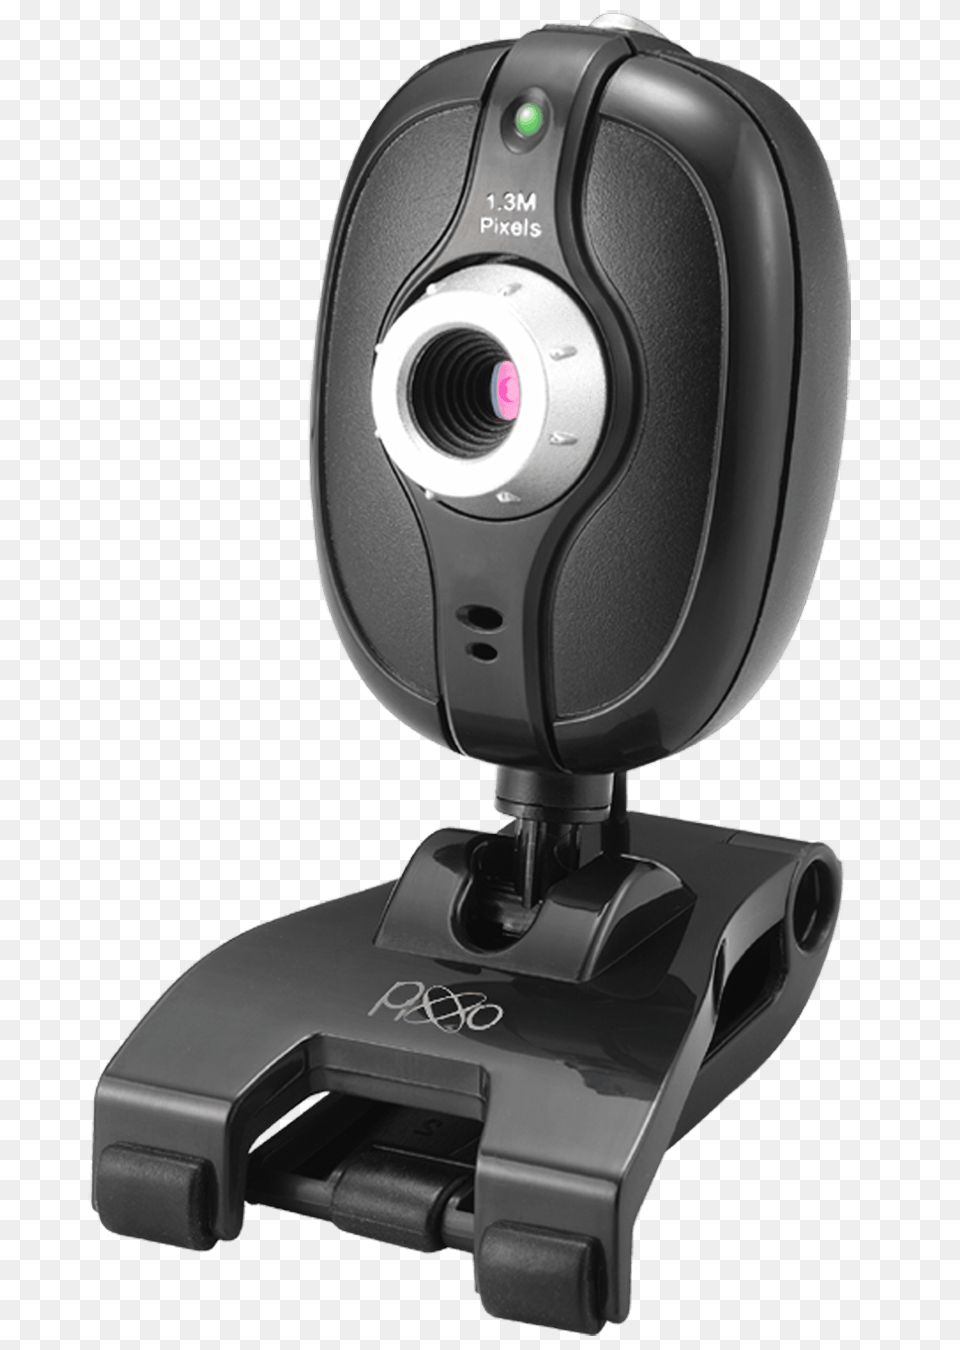 Aw, Camera, Electronics, Webcam Png Image